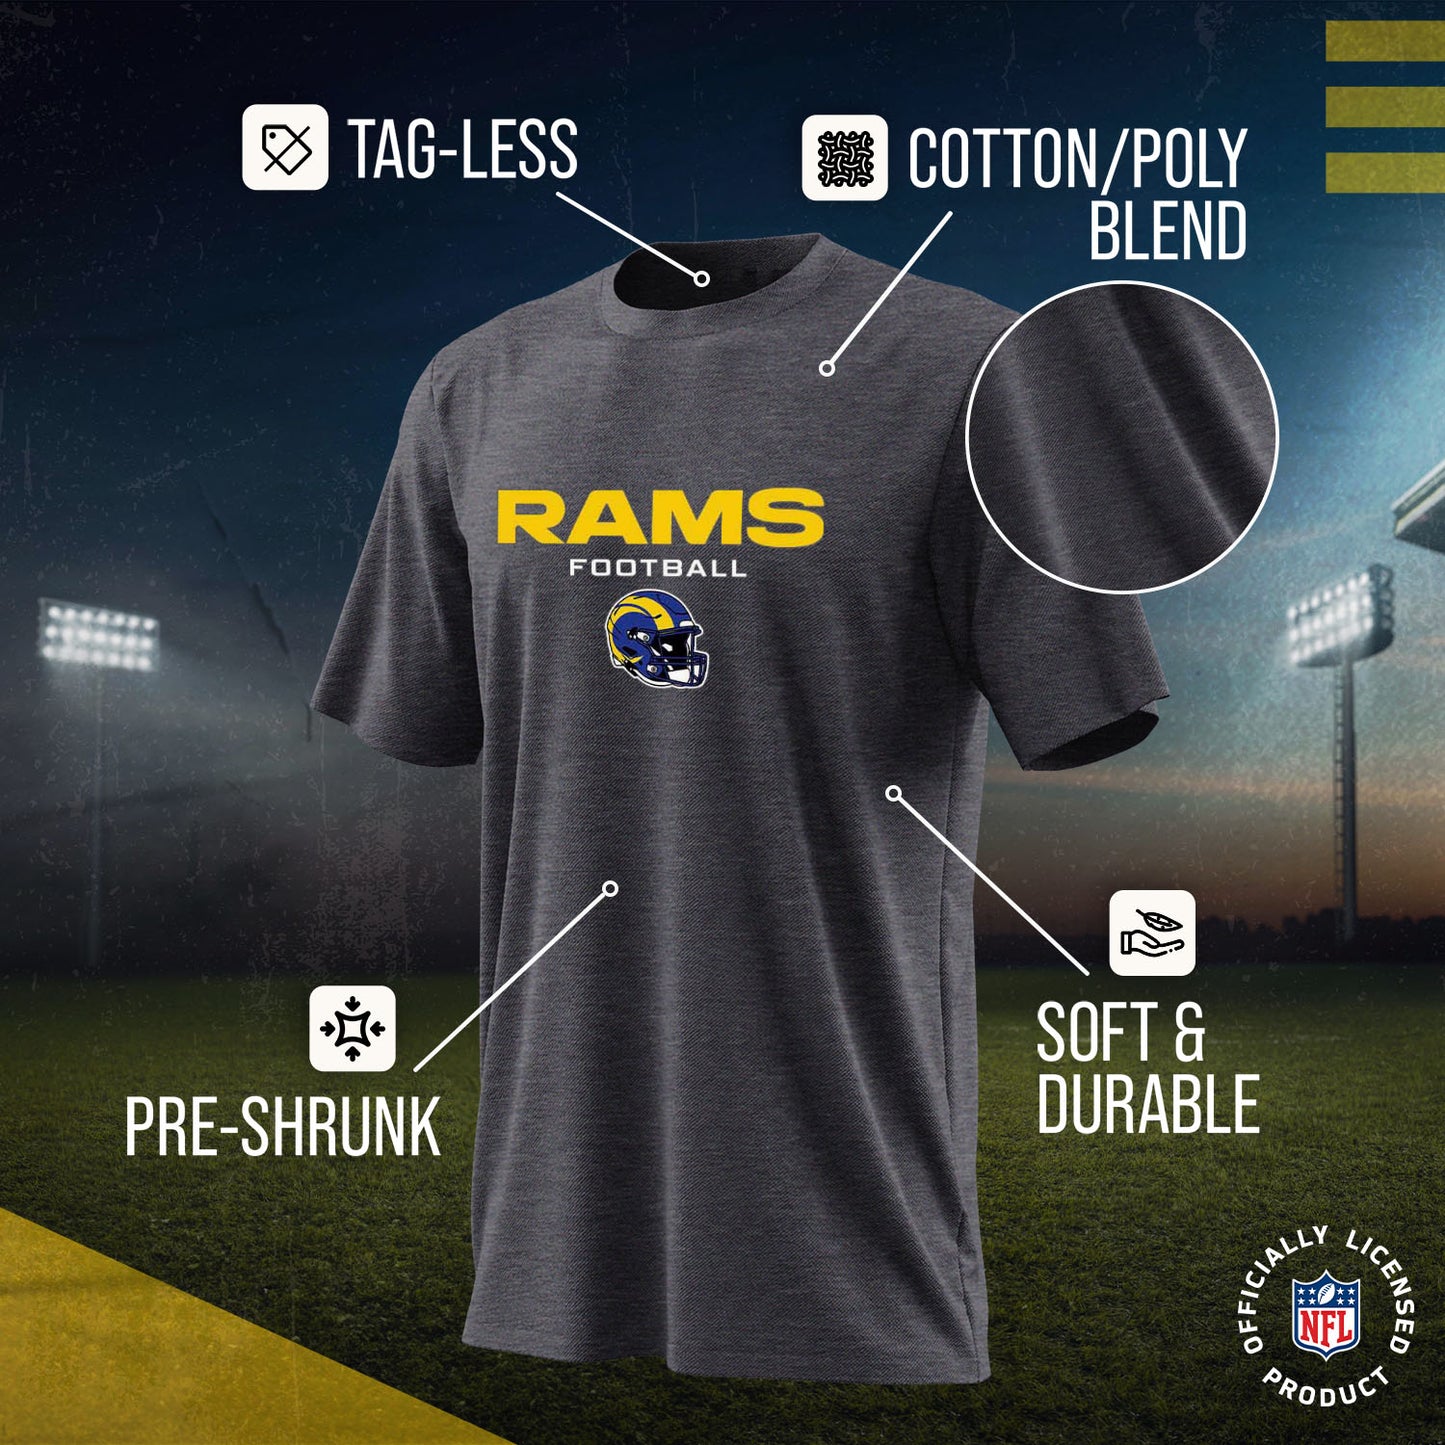 Los Angeles Rams NFL Youth Football Helmet Tagless T-Shirt - Charcoal